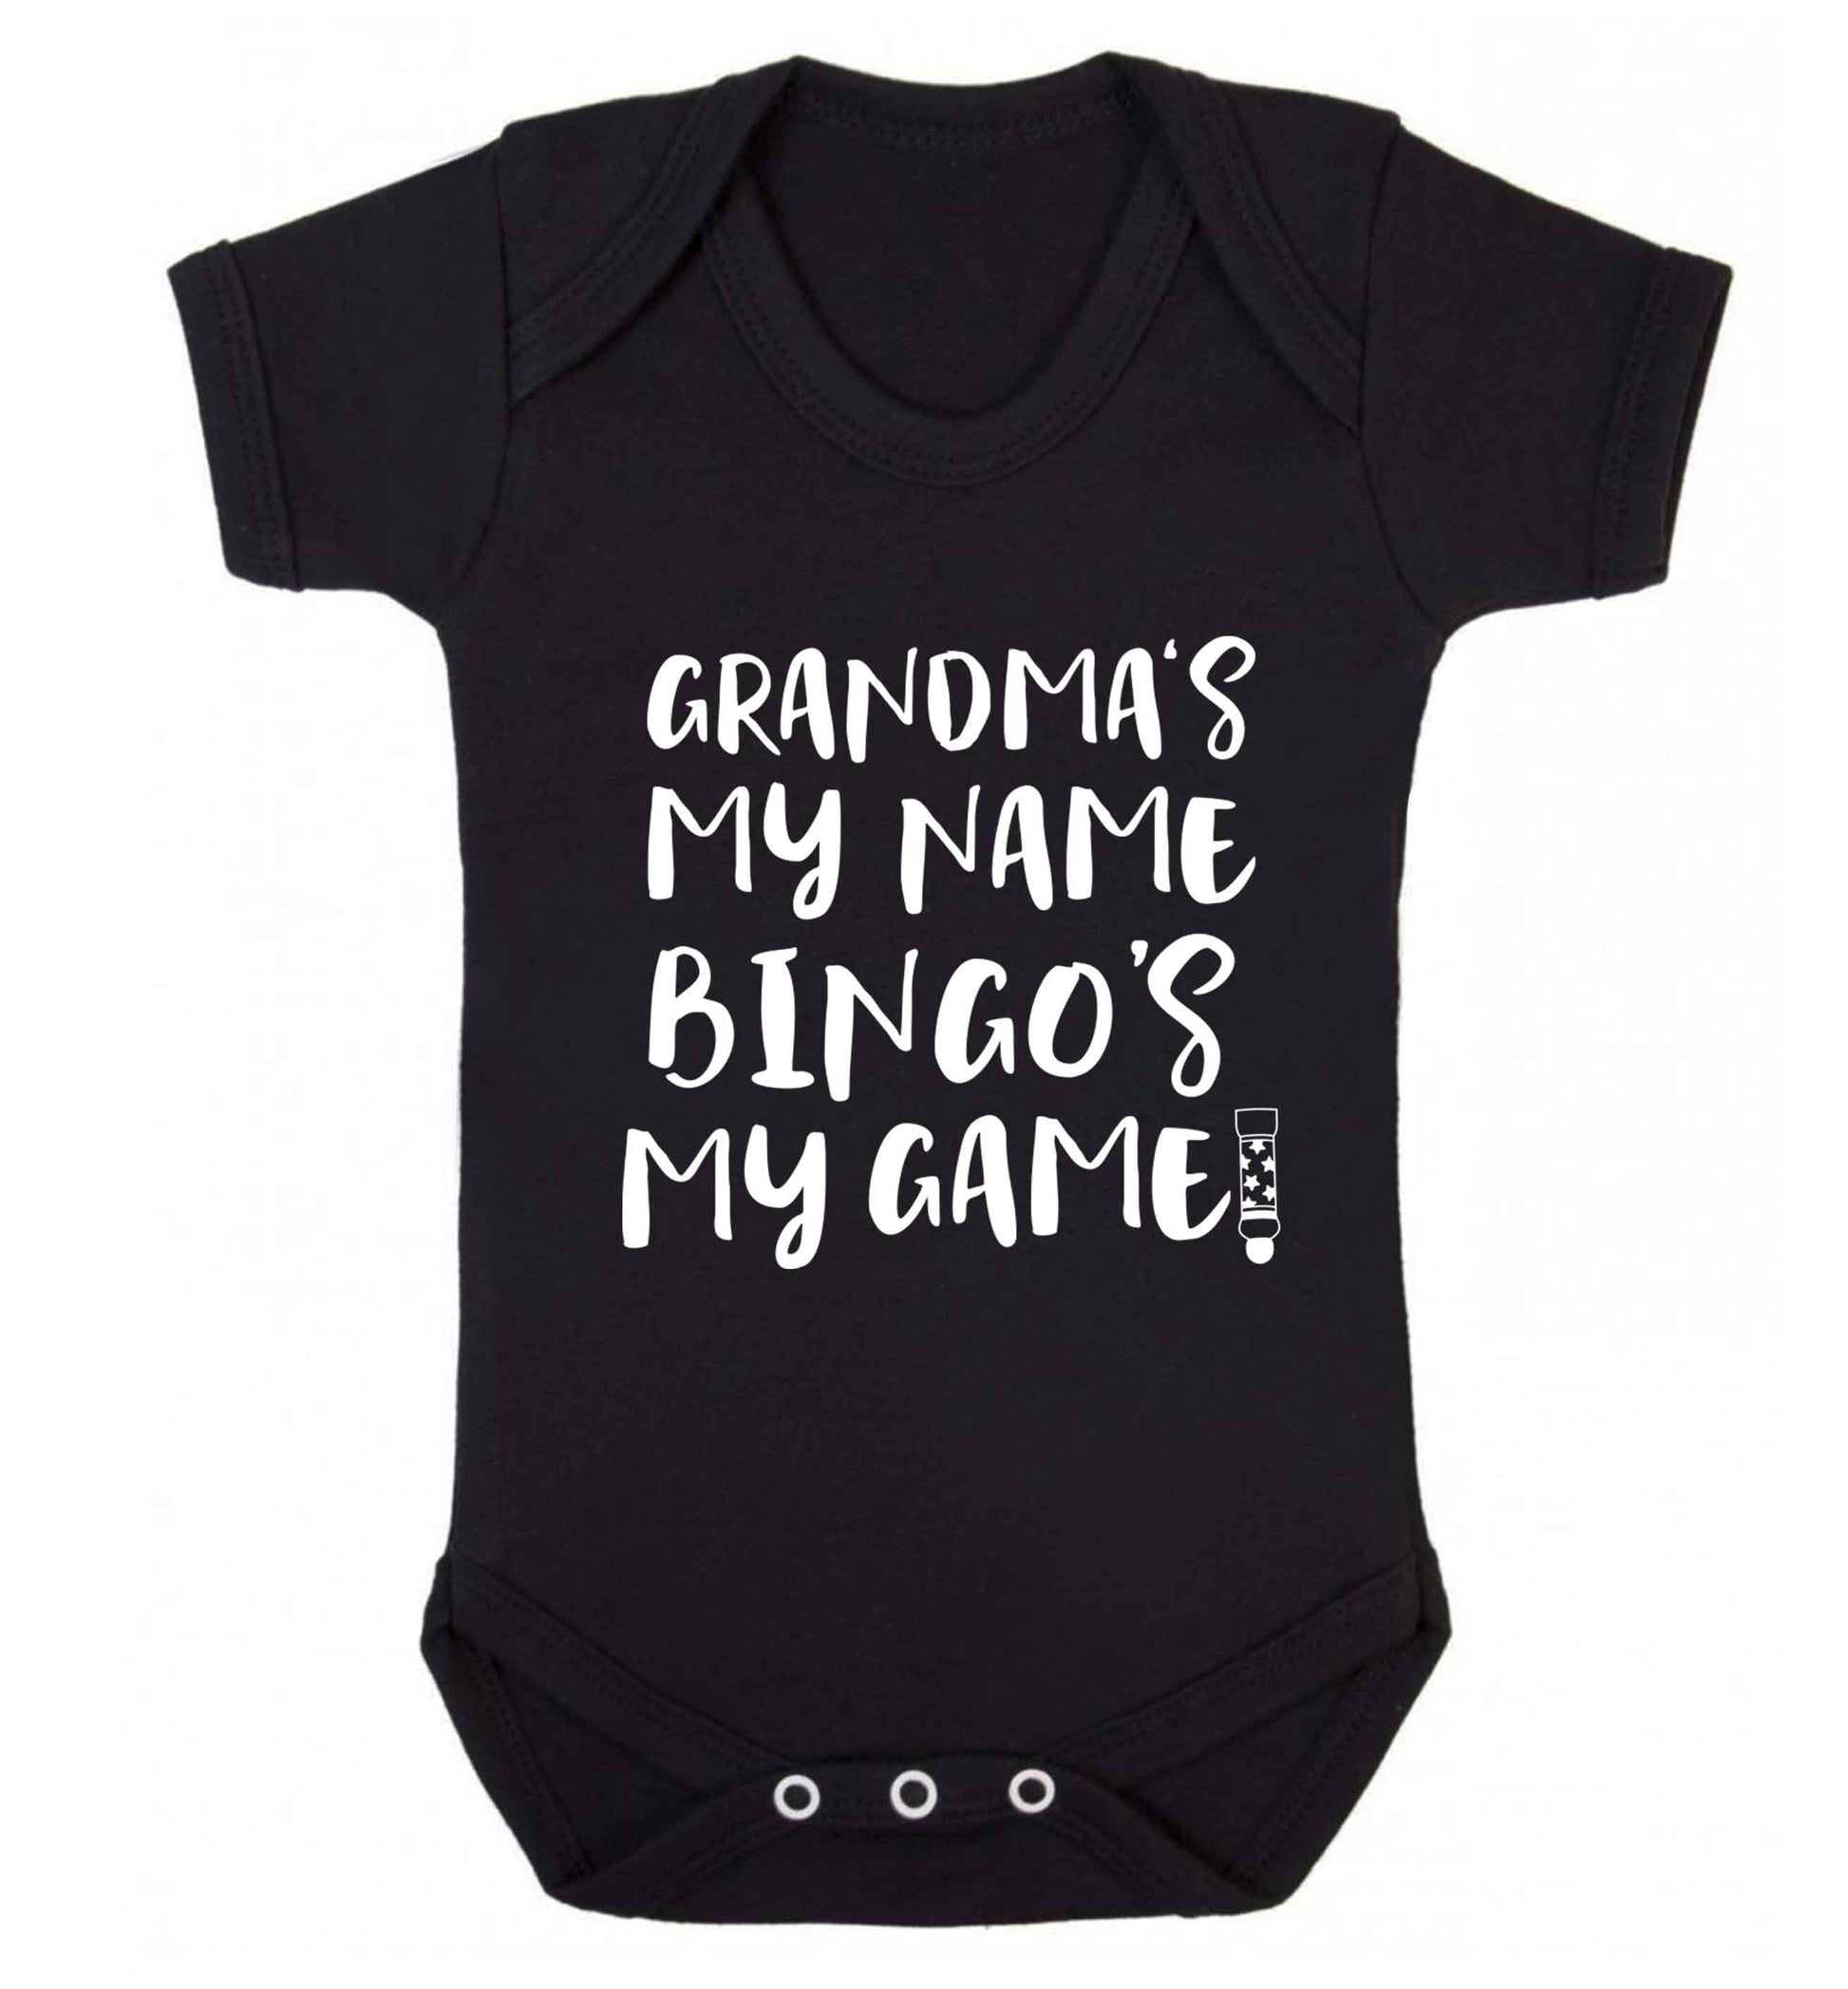 Grandma's my name bingo's my game! Baby Vest black 18-24 months